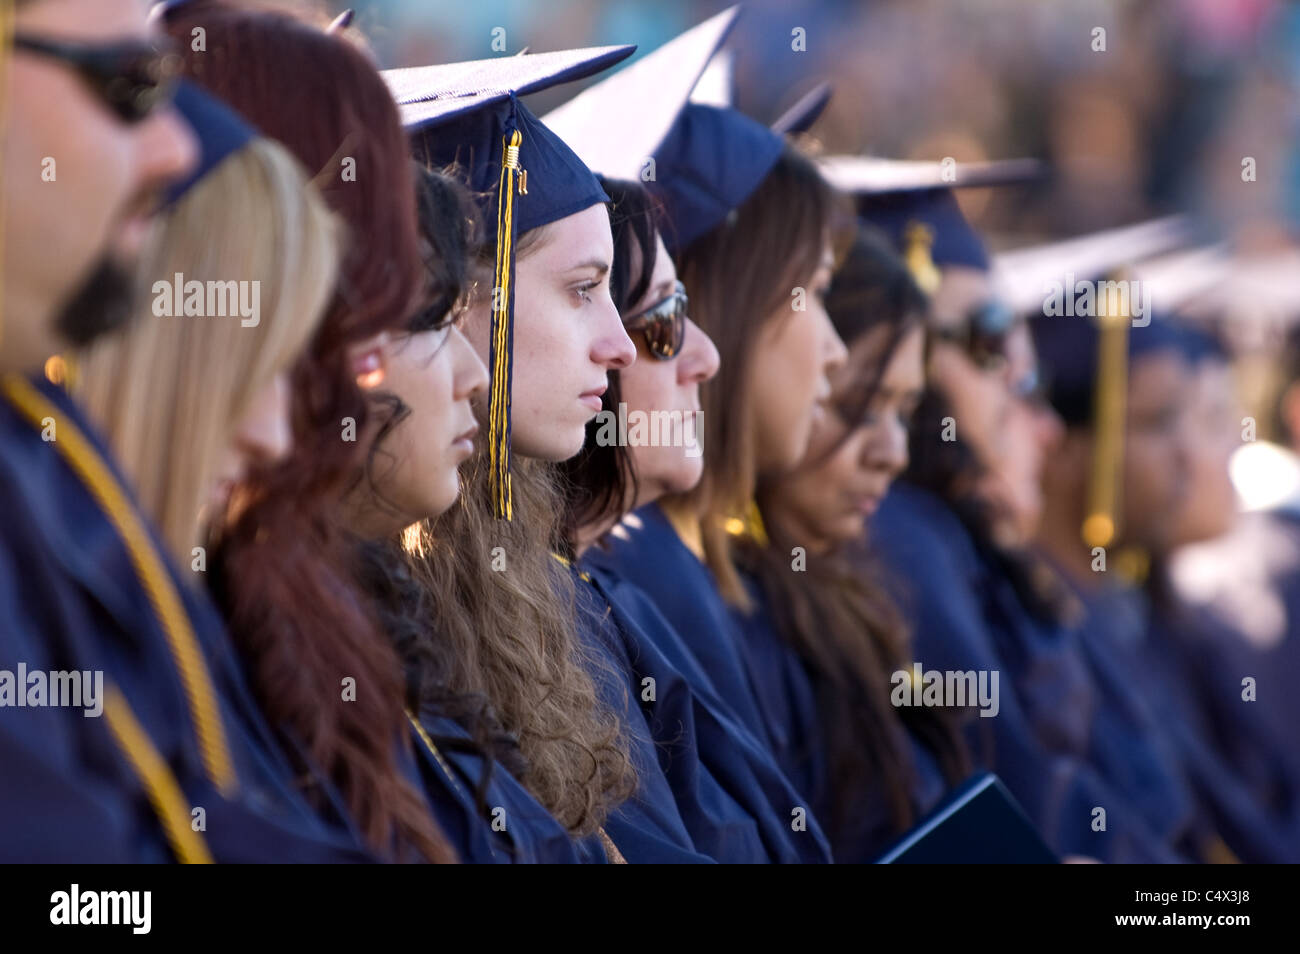 At the Fullerton graduation ceremony a row of graduating seniors wait. Stock Photo